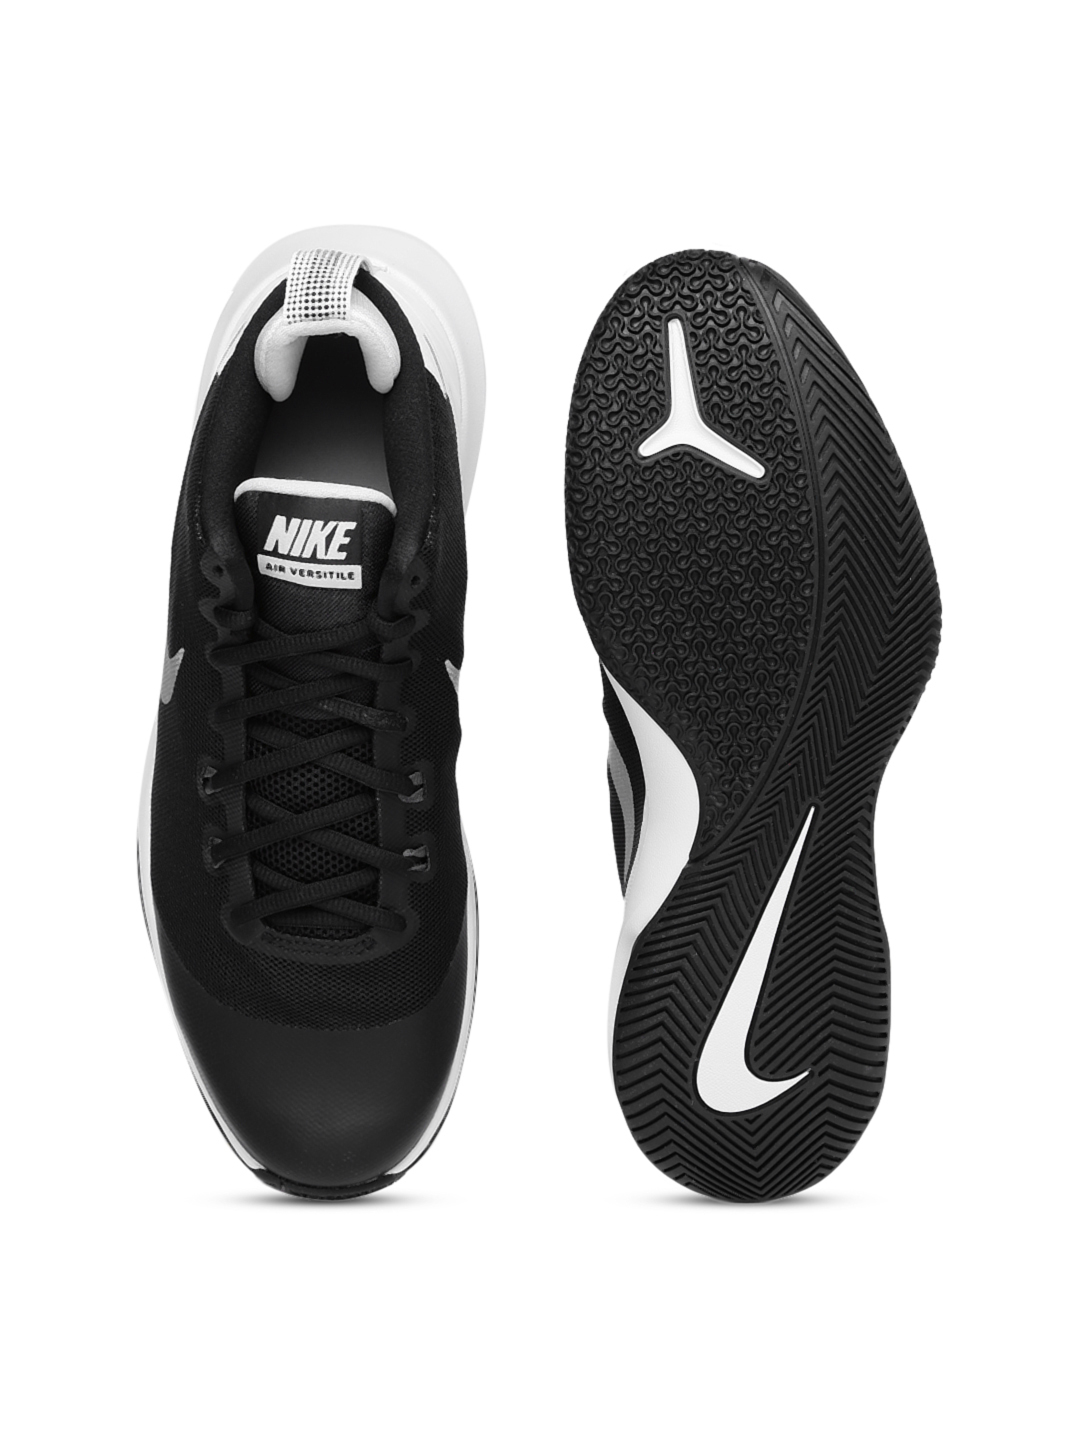 NIKE Men Black Air Versitile Colourblocked Basketball Shoes image 1